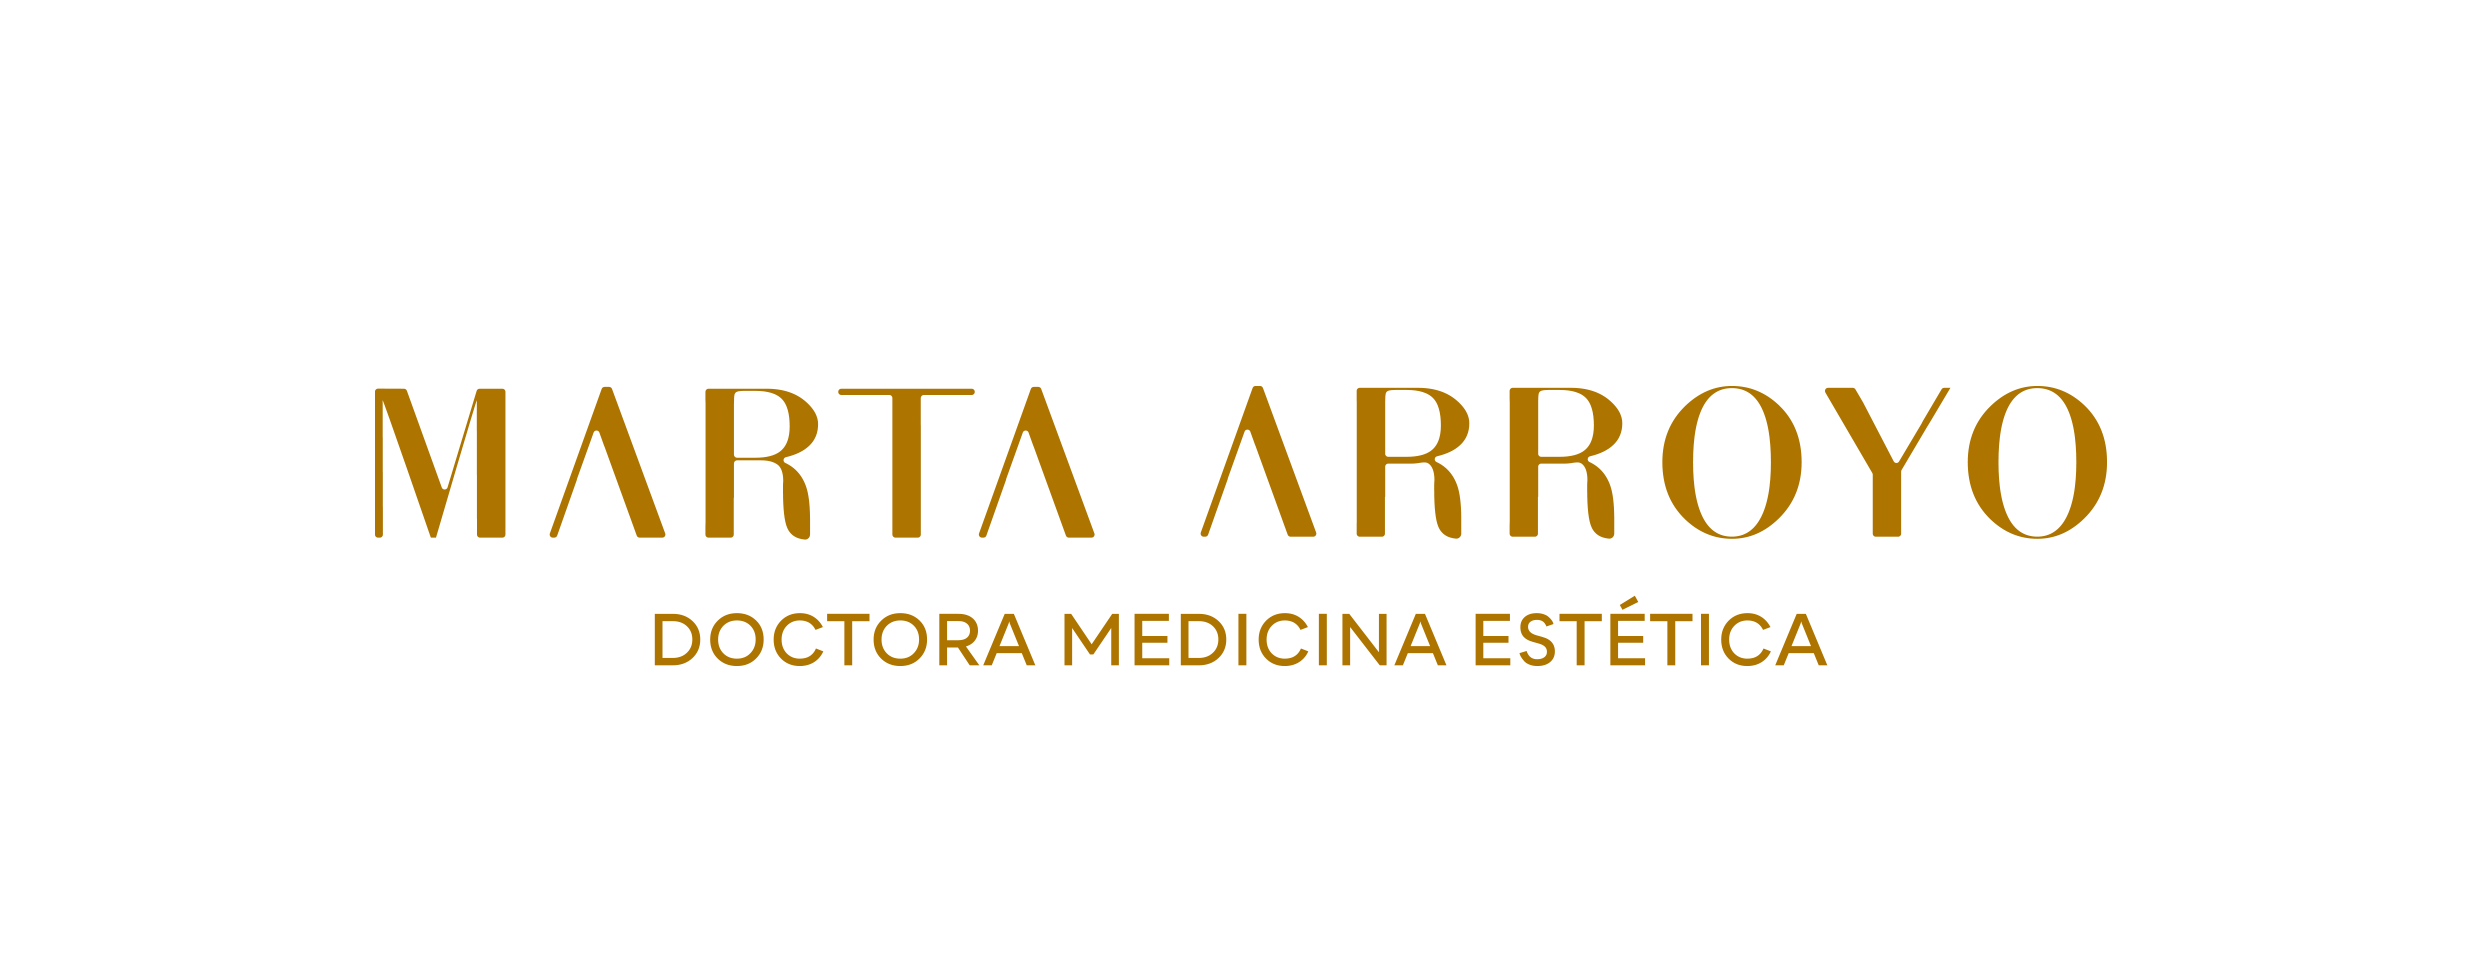 Doctora Marta Arroyo